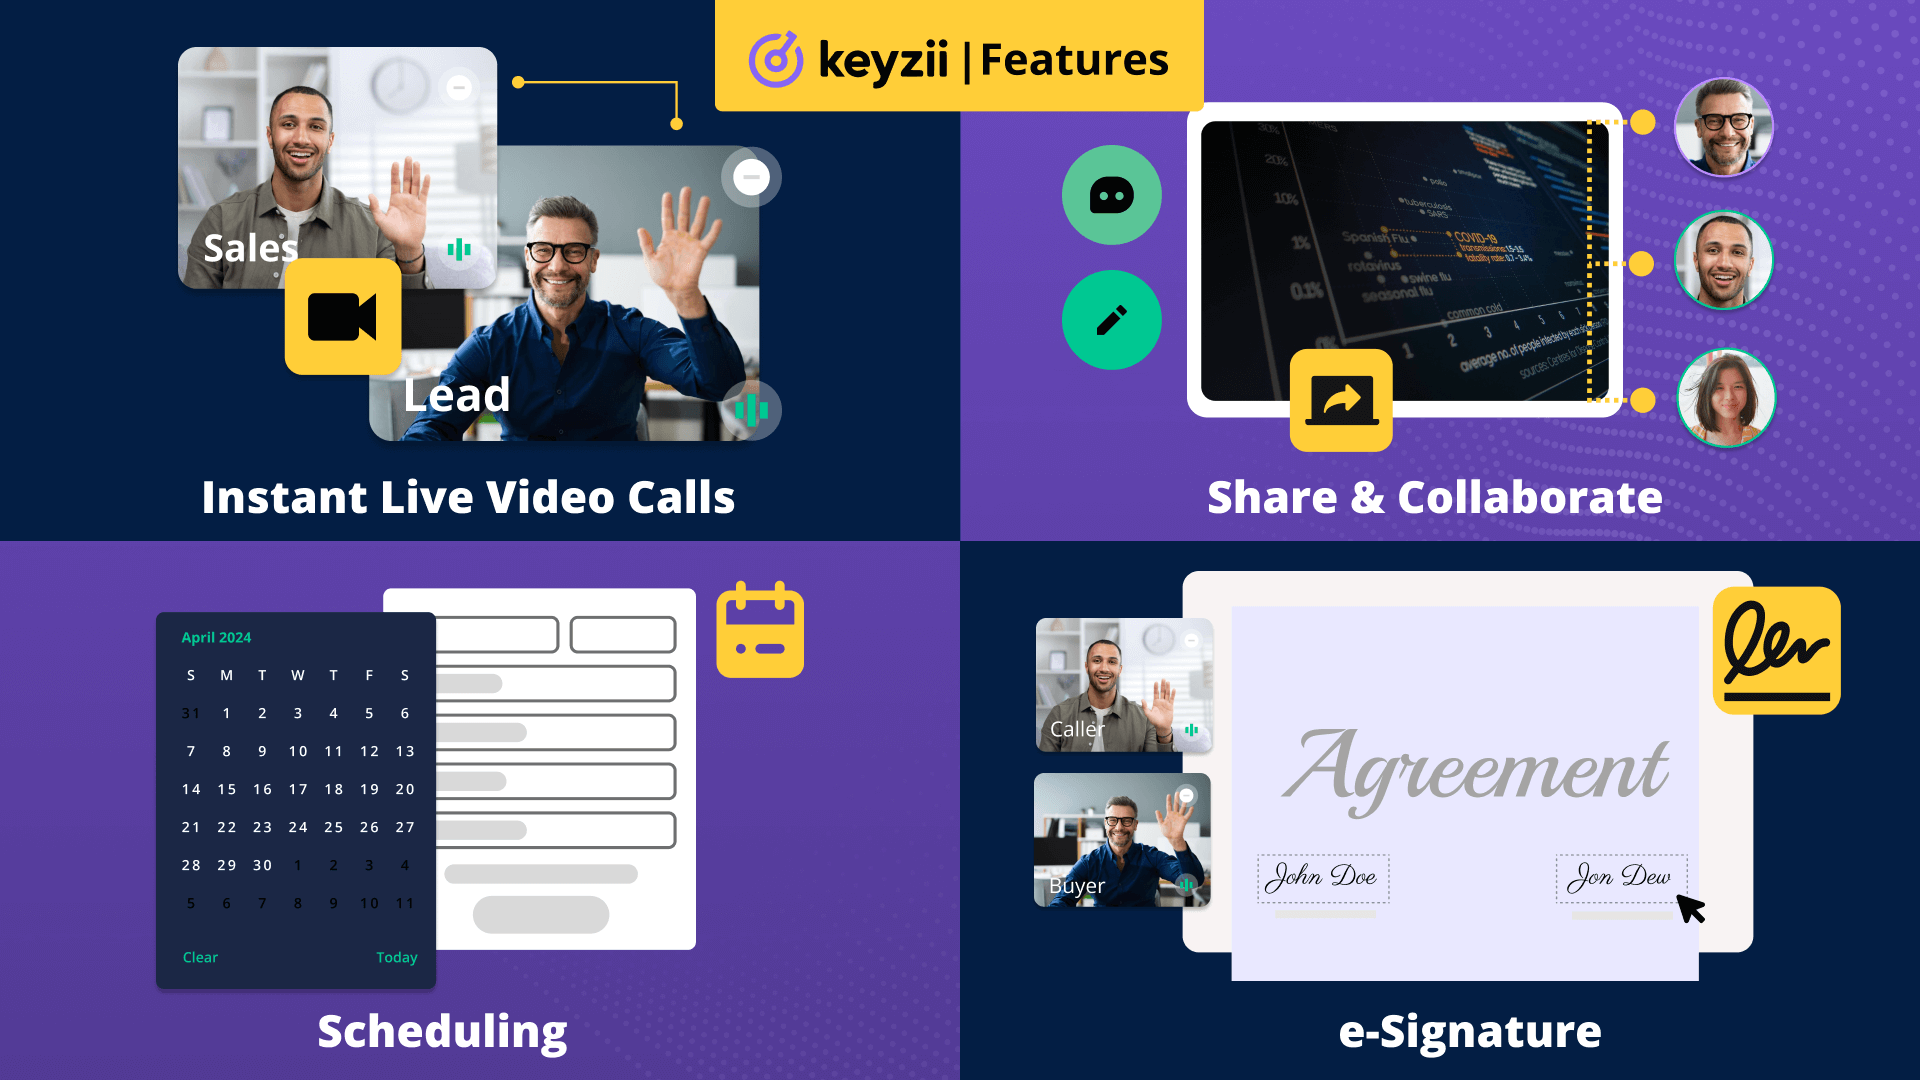 Keyzii Features